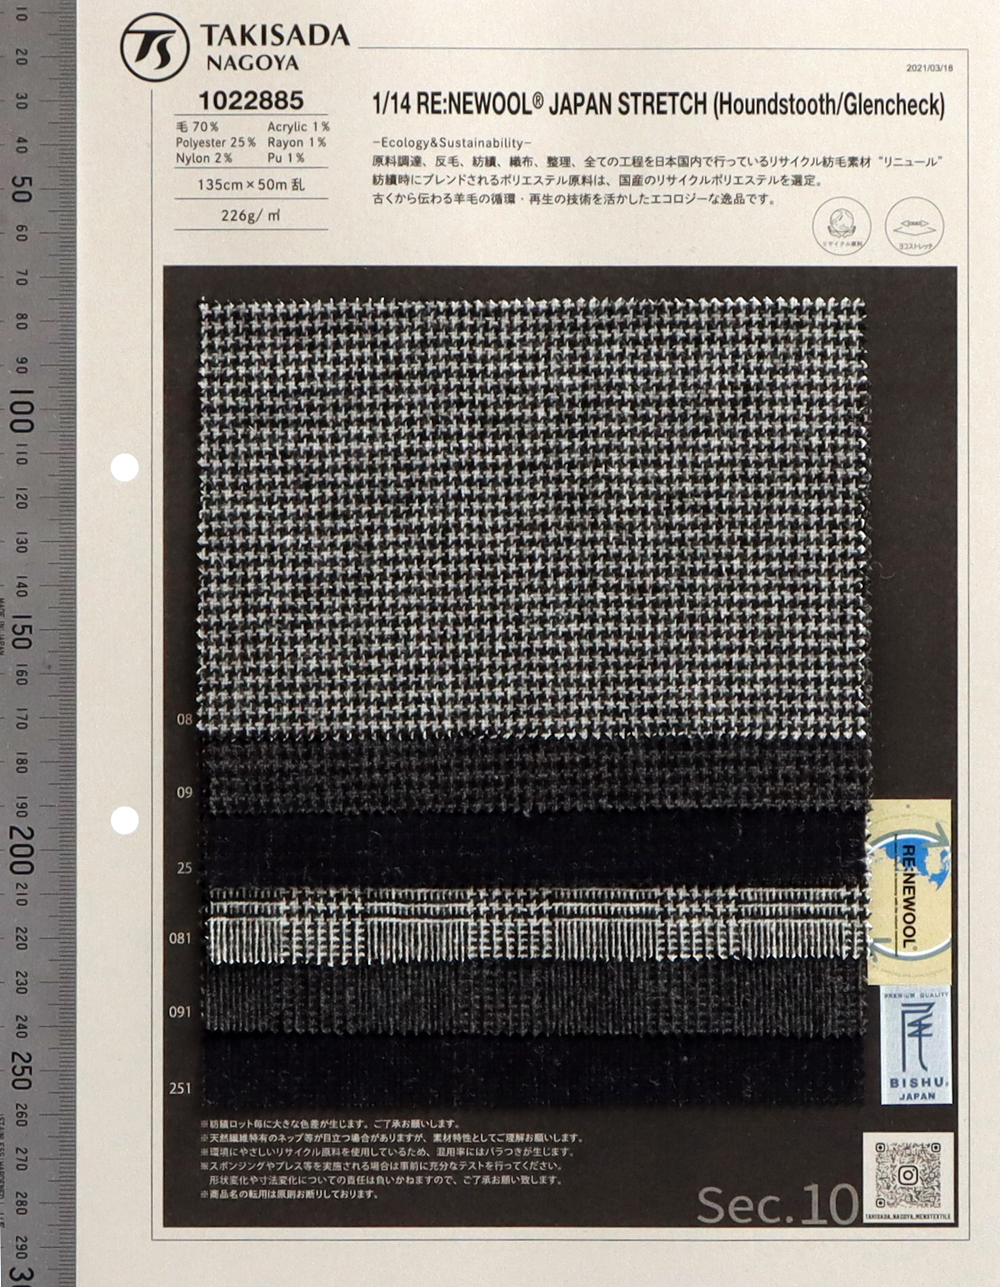 1022885 Serie De Cuadros Planos De Franela Elástica RE:NEWOOL® JAPAN[Fabrica Textil] Takisada Nagoya